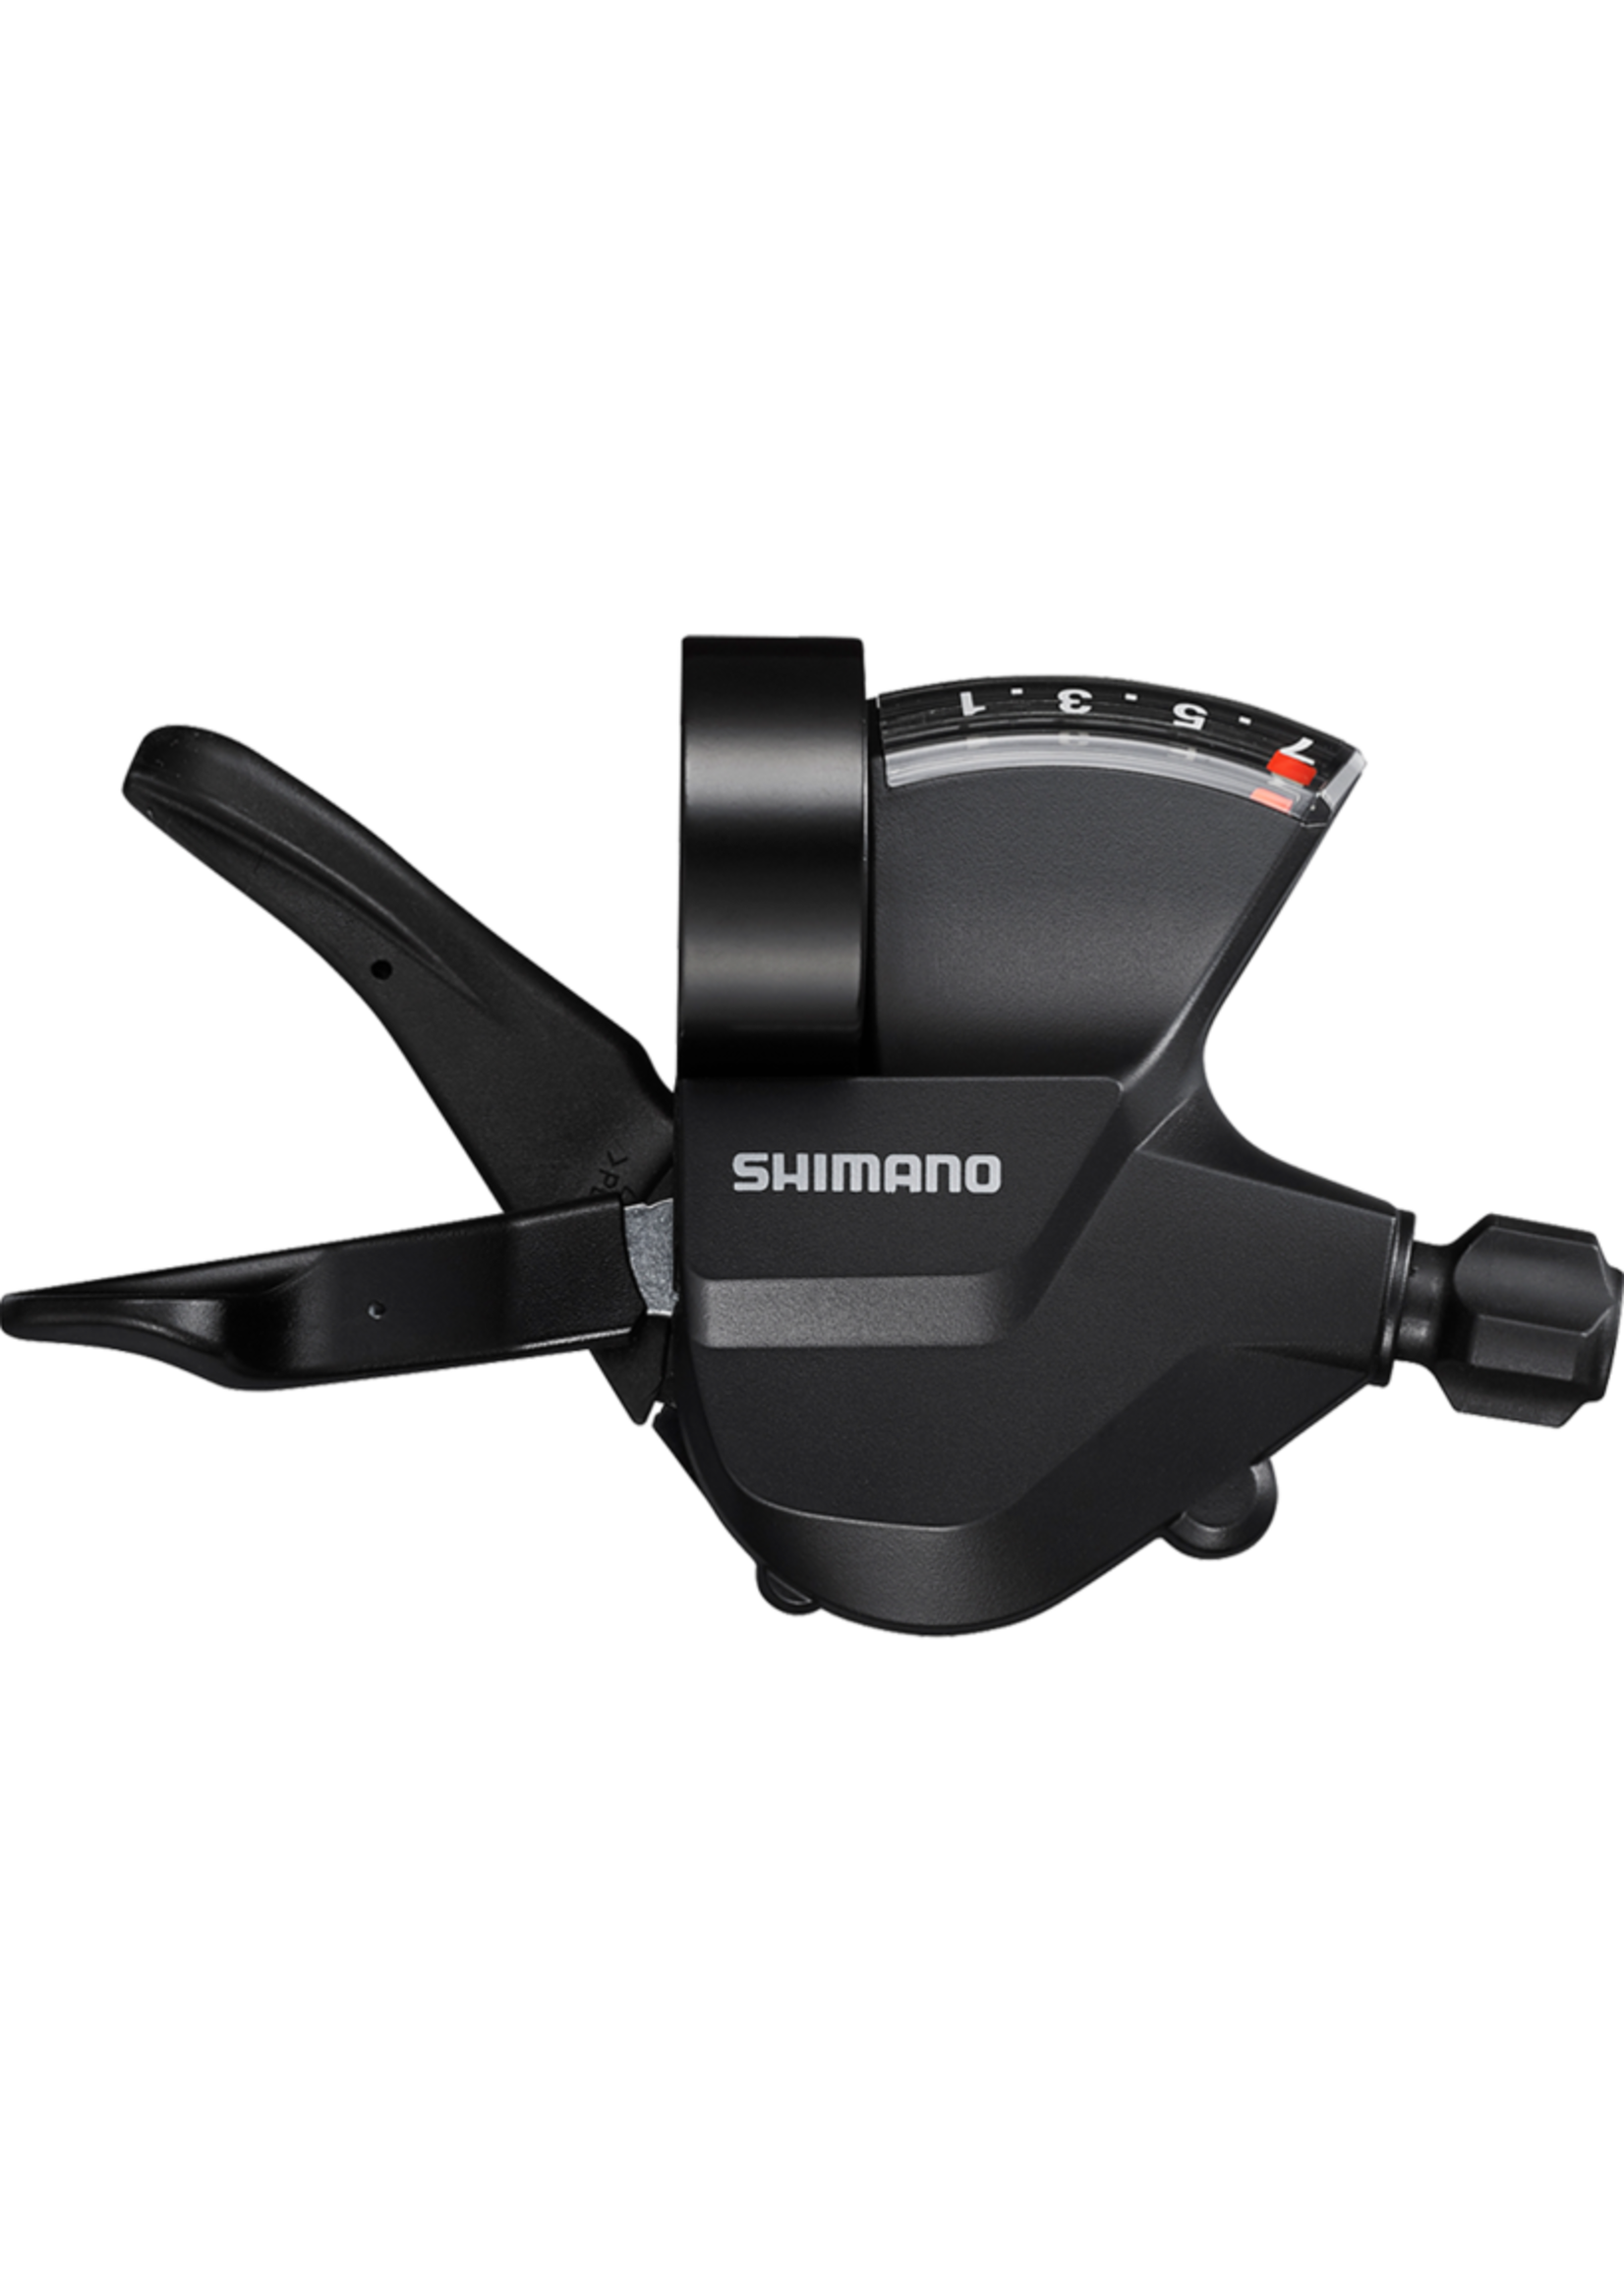 Shimano SHIMANO - Levier de vitesses droite - 7 vit. - SL-M315 -7R